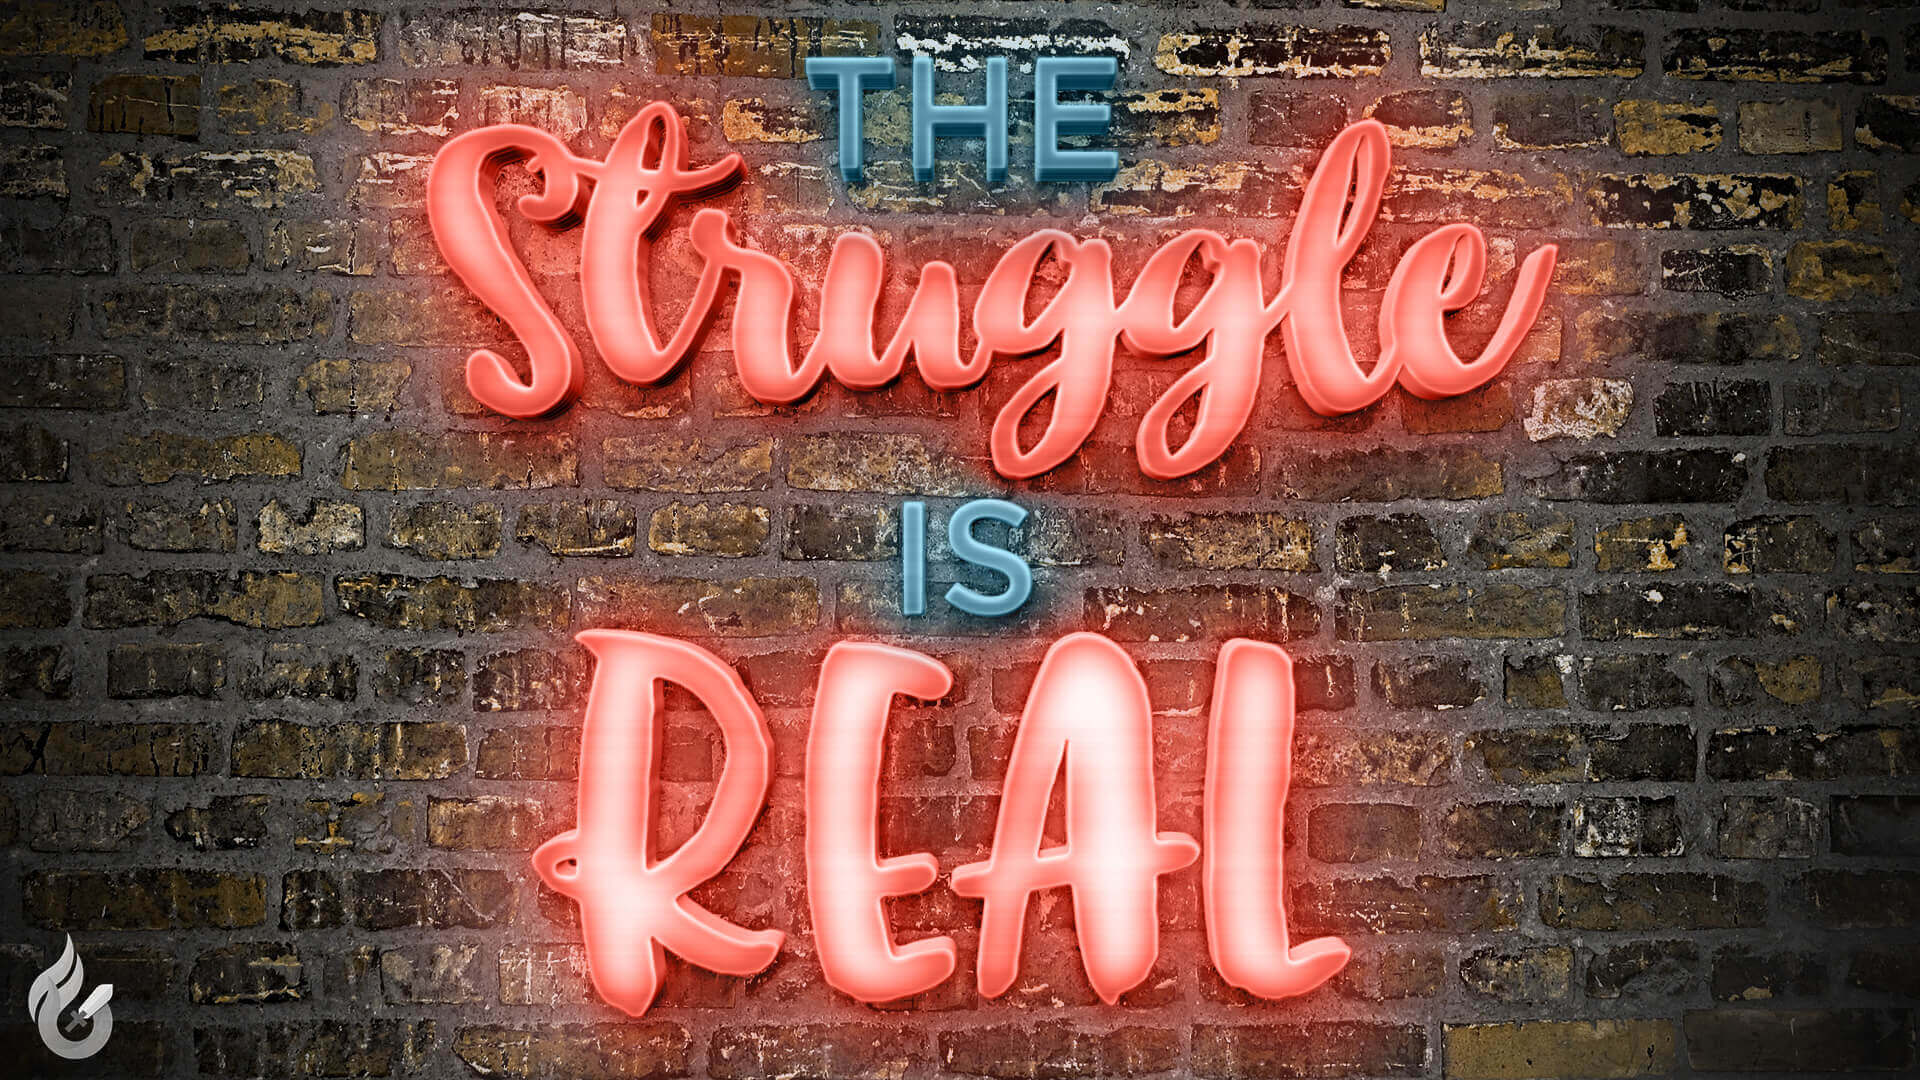 The Struggle is Real by Ebonie Jones